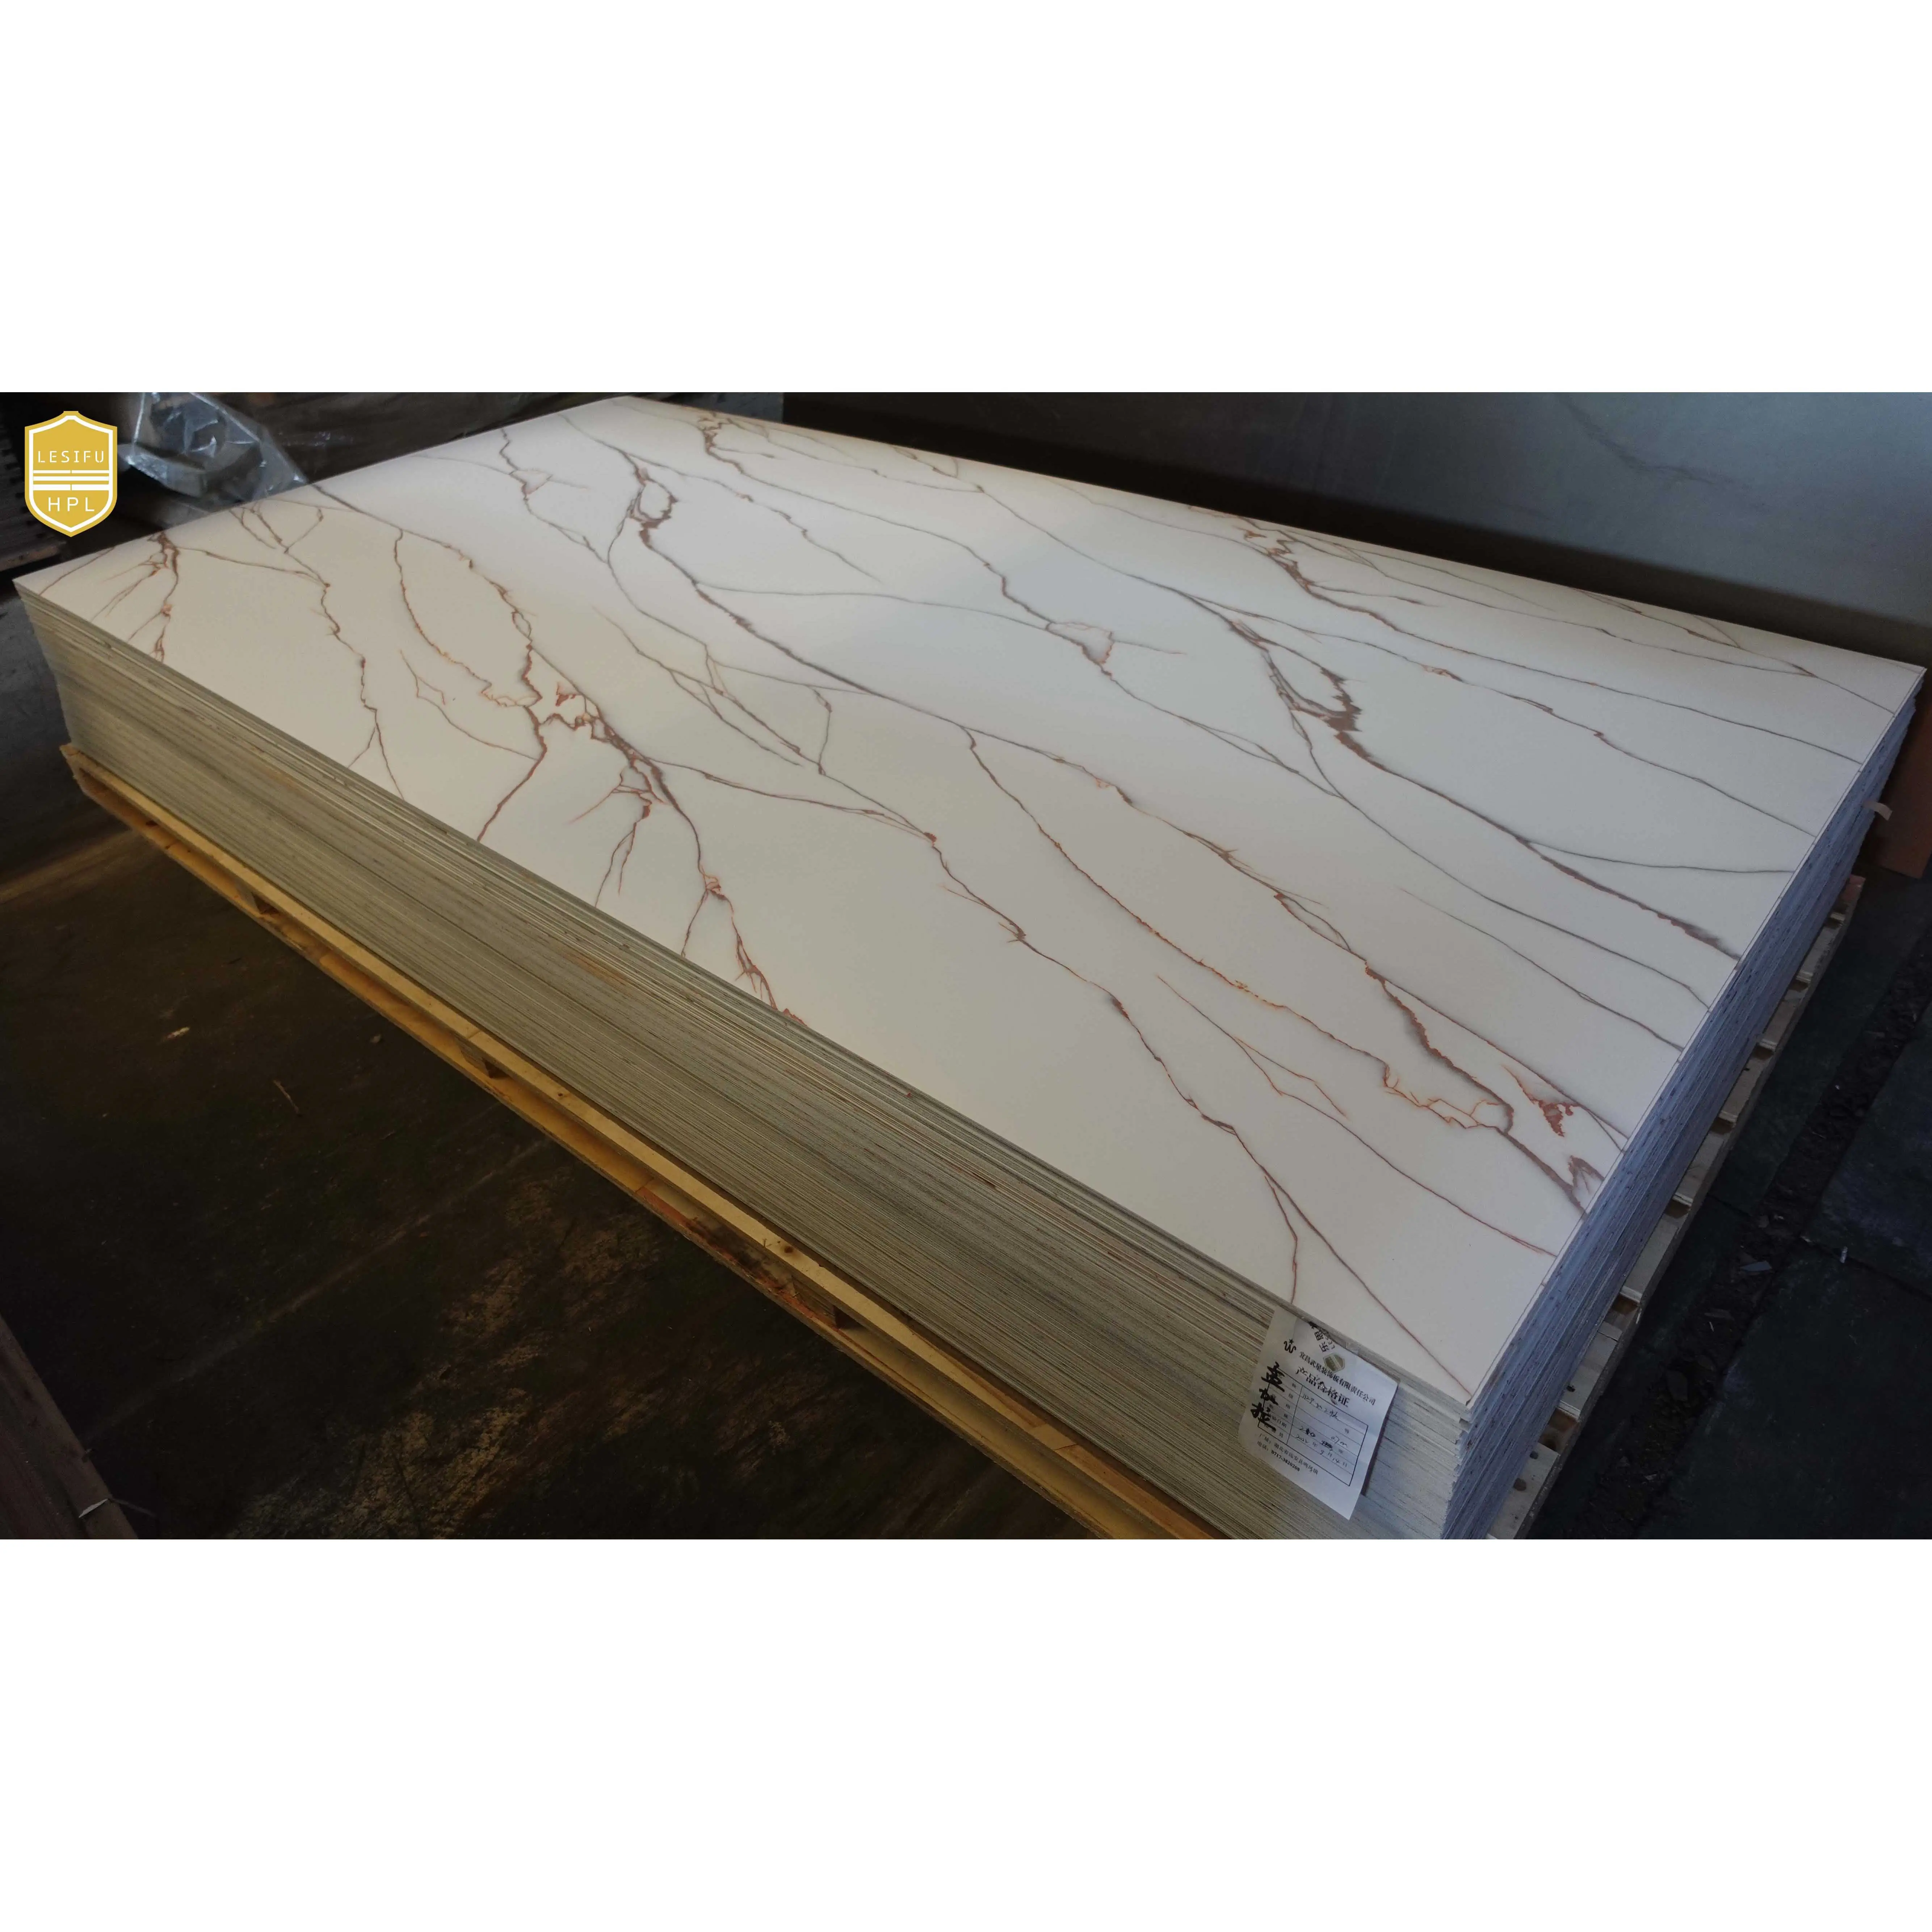 Lesifu Decorative High-Pressure Laminates / HPL formica marble look laminate marble laminate hpl